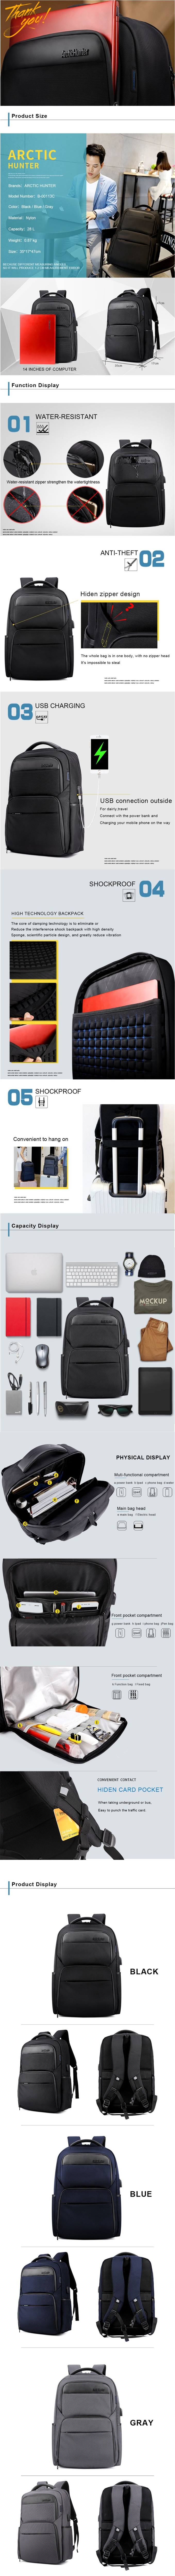 ARCTIC-HUNTER-B00113C-Laptop-Backpack-Male-USB-Charge-Backpack-Laptop-Bag-Men-Casual-Travel-Nylon-Ba-1481218